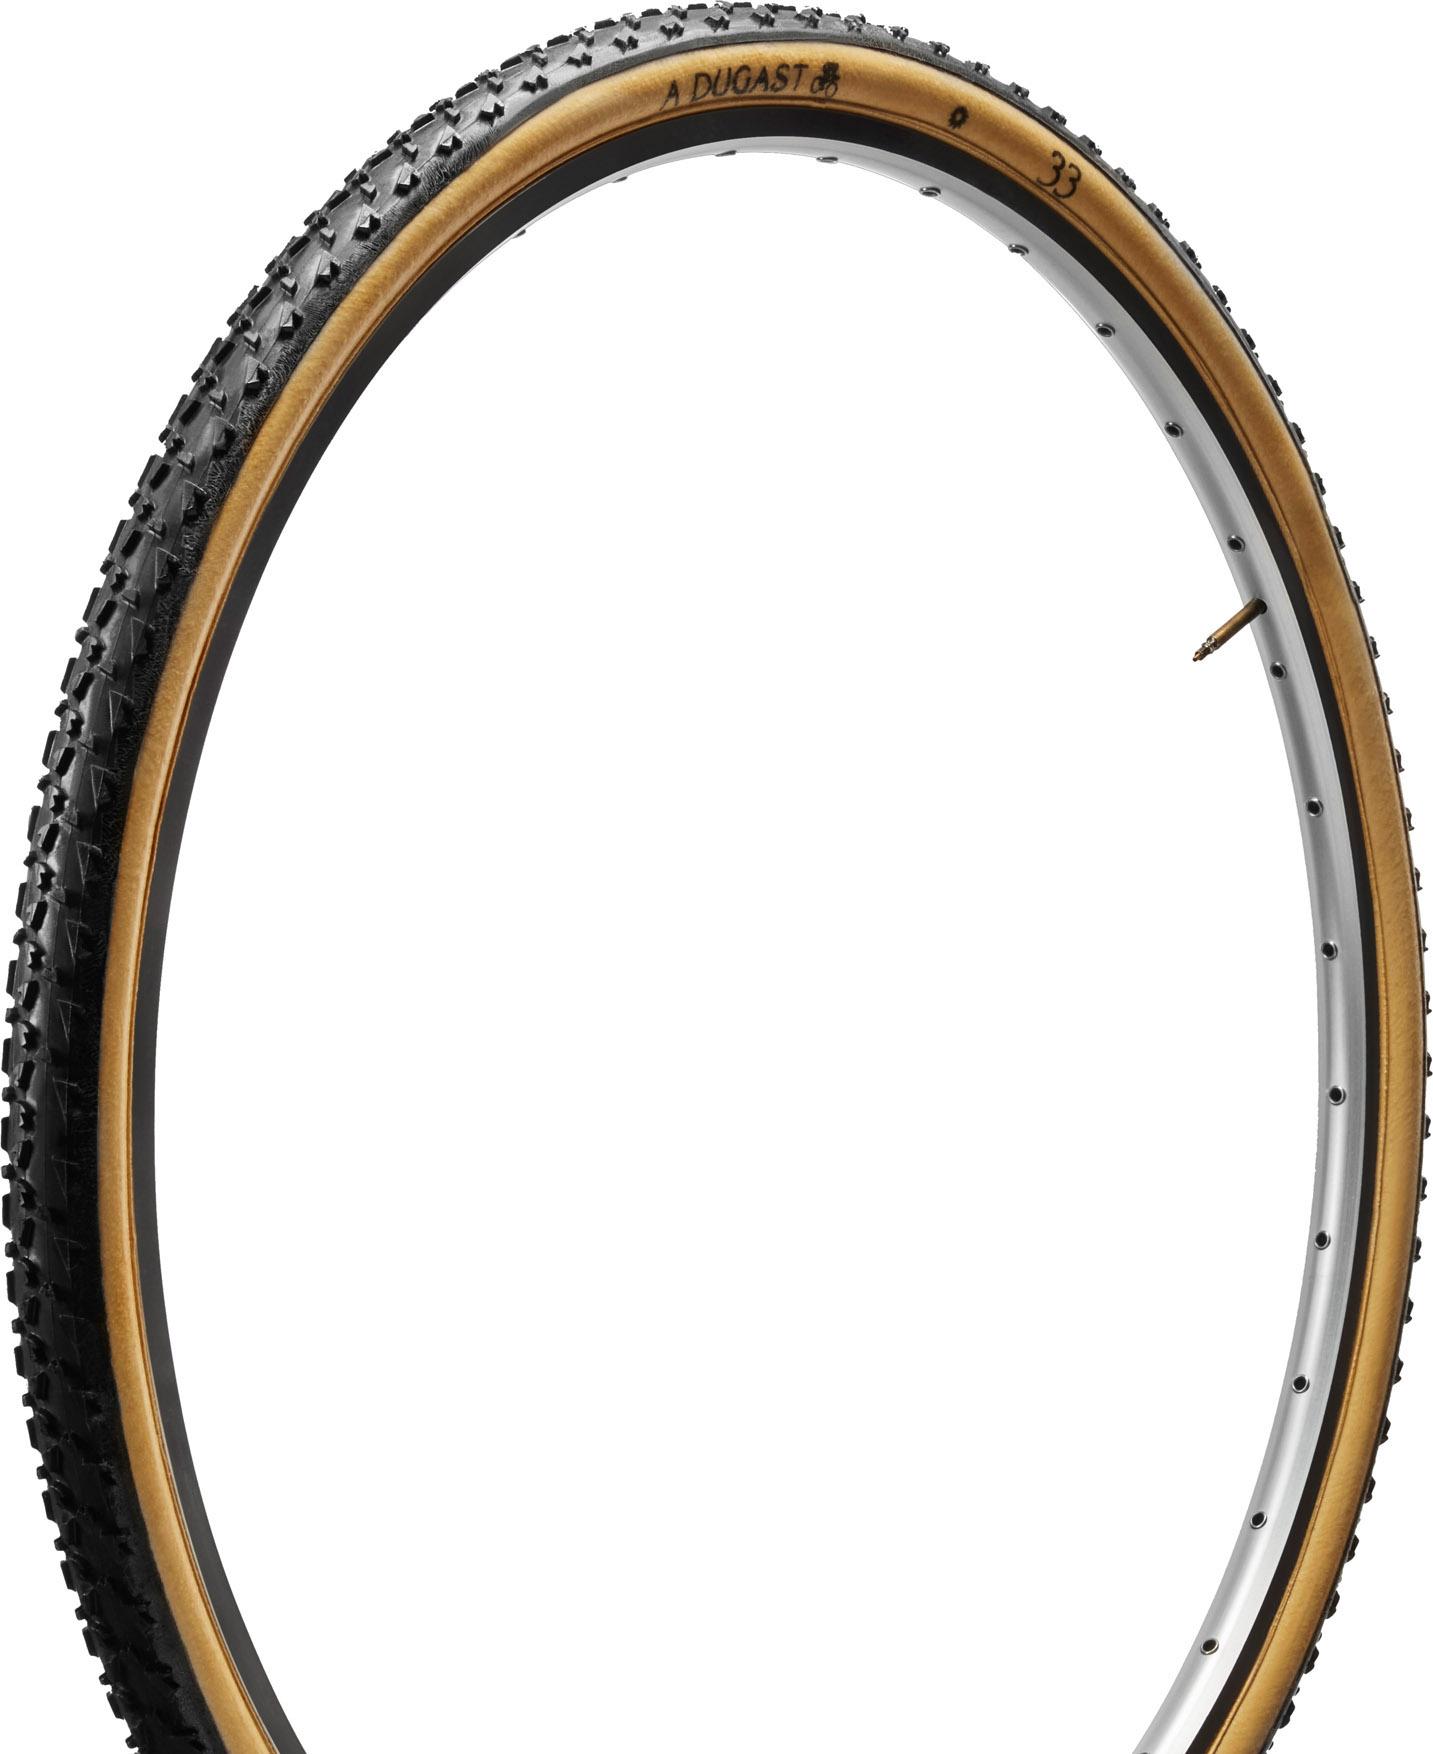 Image of Dugast Rhino 11 Storm Cyclocross Tyre - Black/Tan Wall